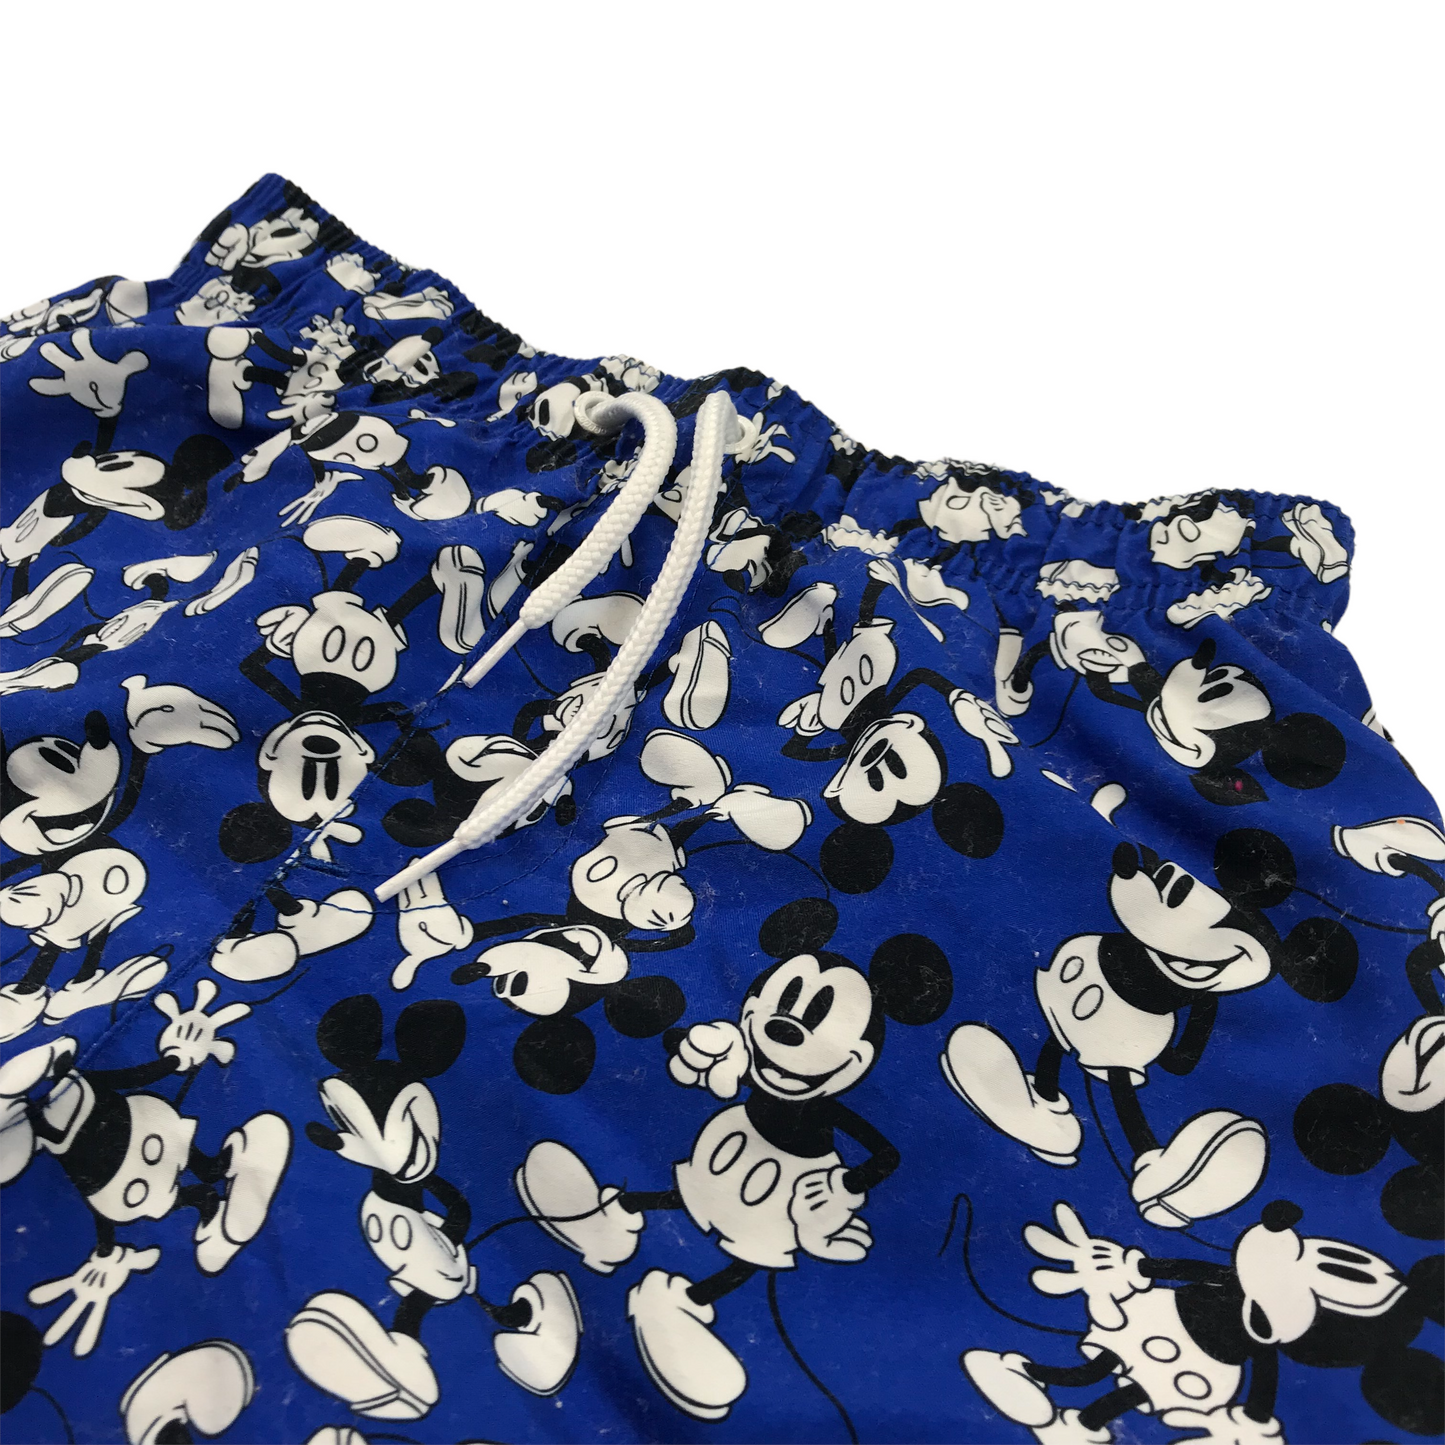 Speedo Blue Disney Mickey Mouse Swim Trunks Age 7-8